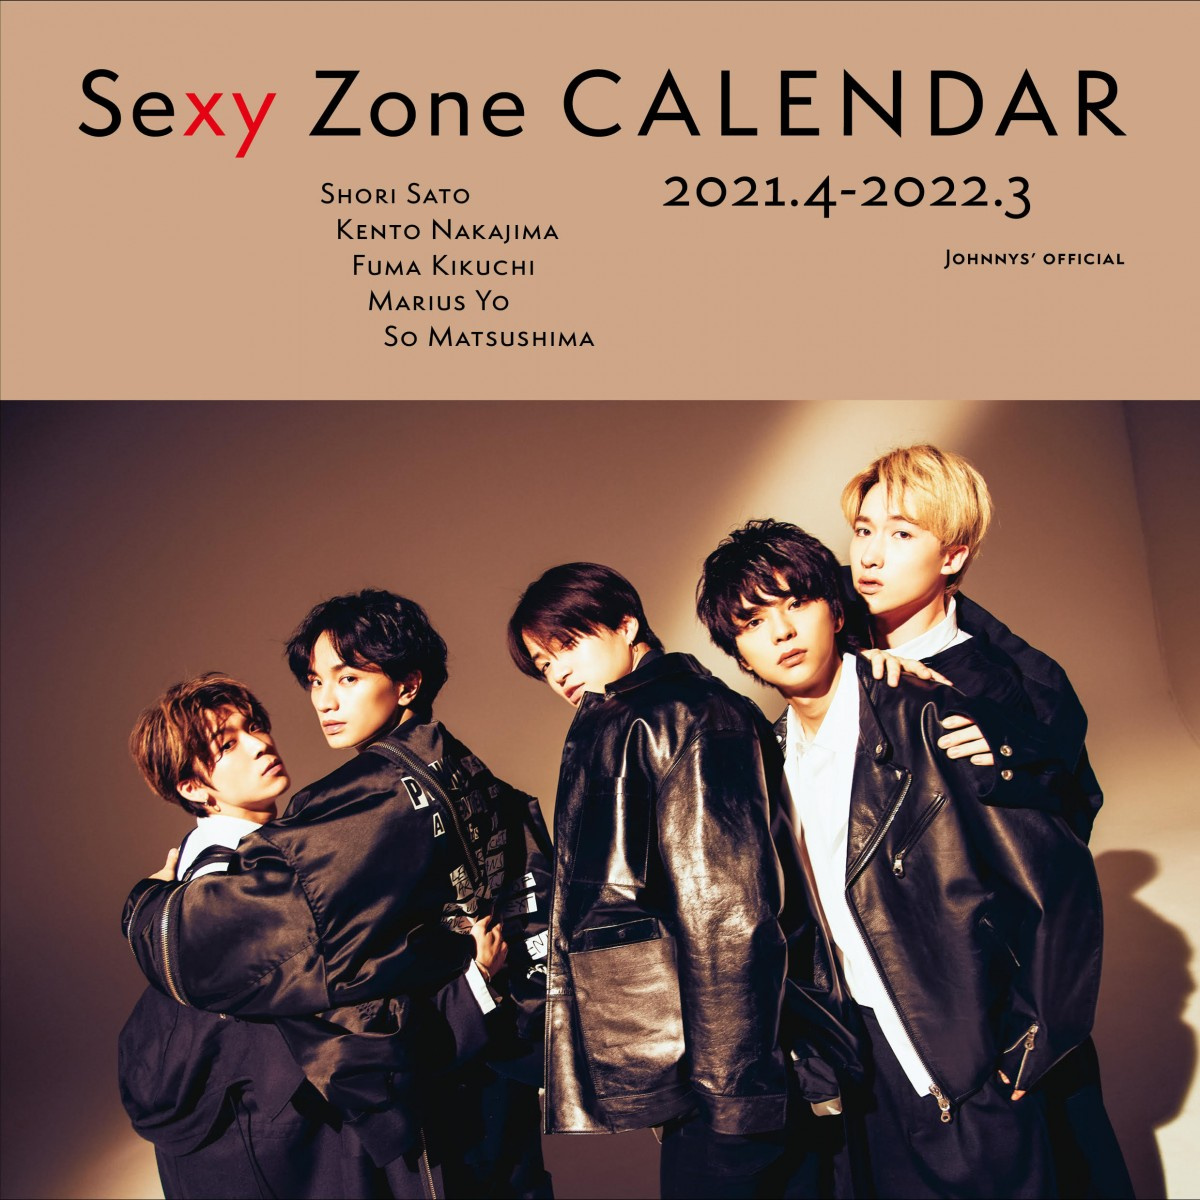 Sexyzone21年度カレンダーのカバー写真解禁 飾ったときの美しさ を意識 Oricon News